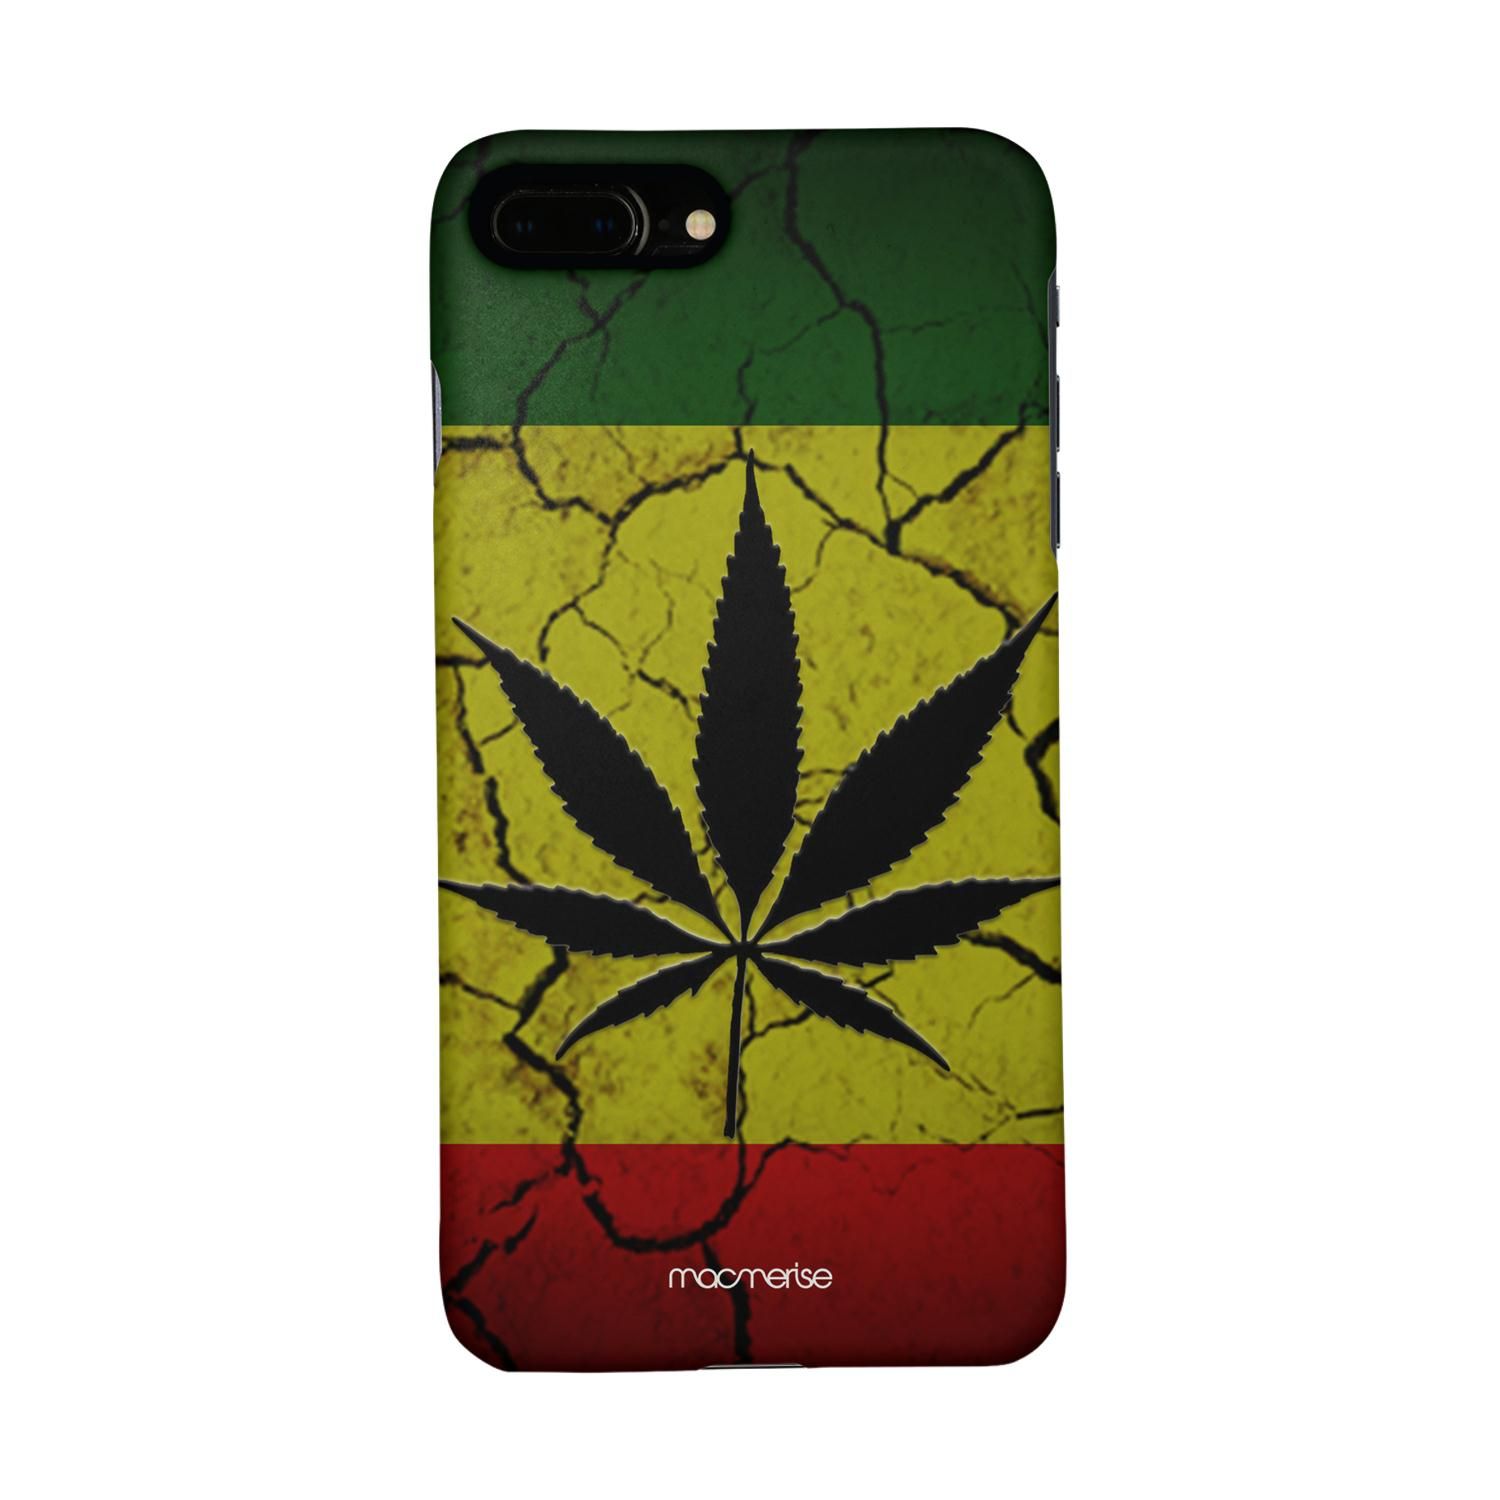 Rastafari - Sleek Phone Case for iPhone 7 Plus